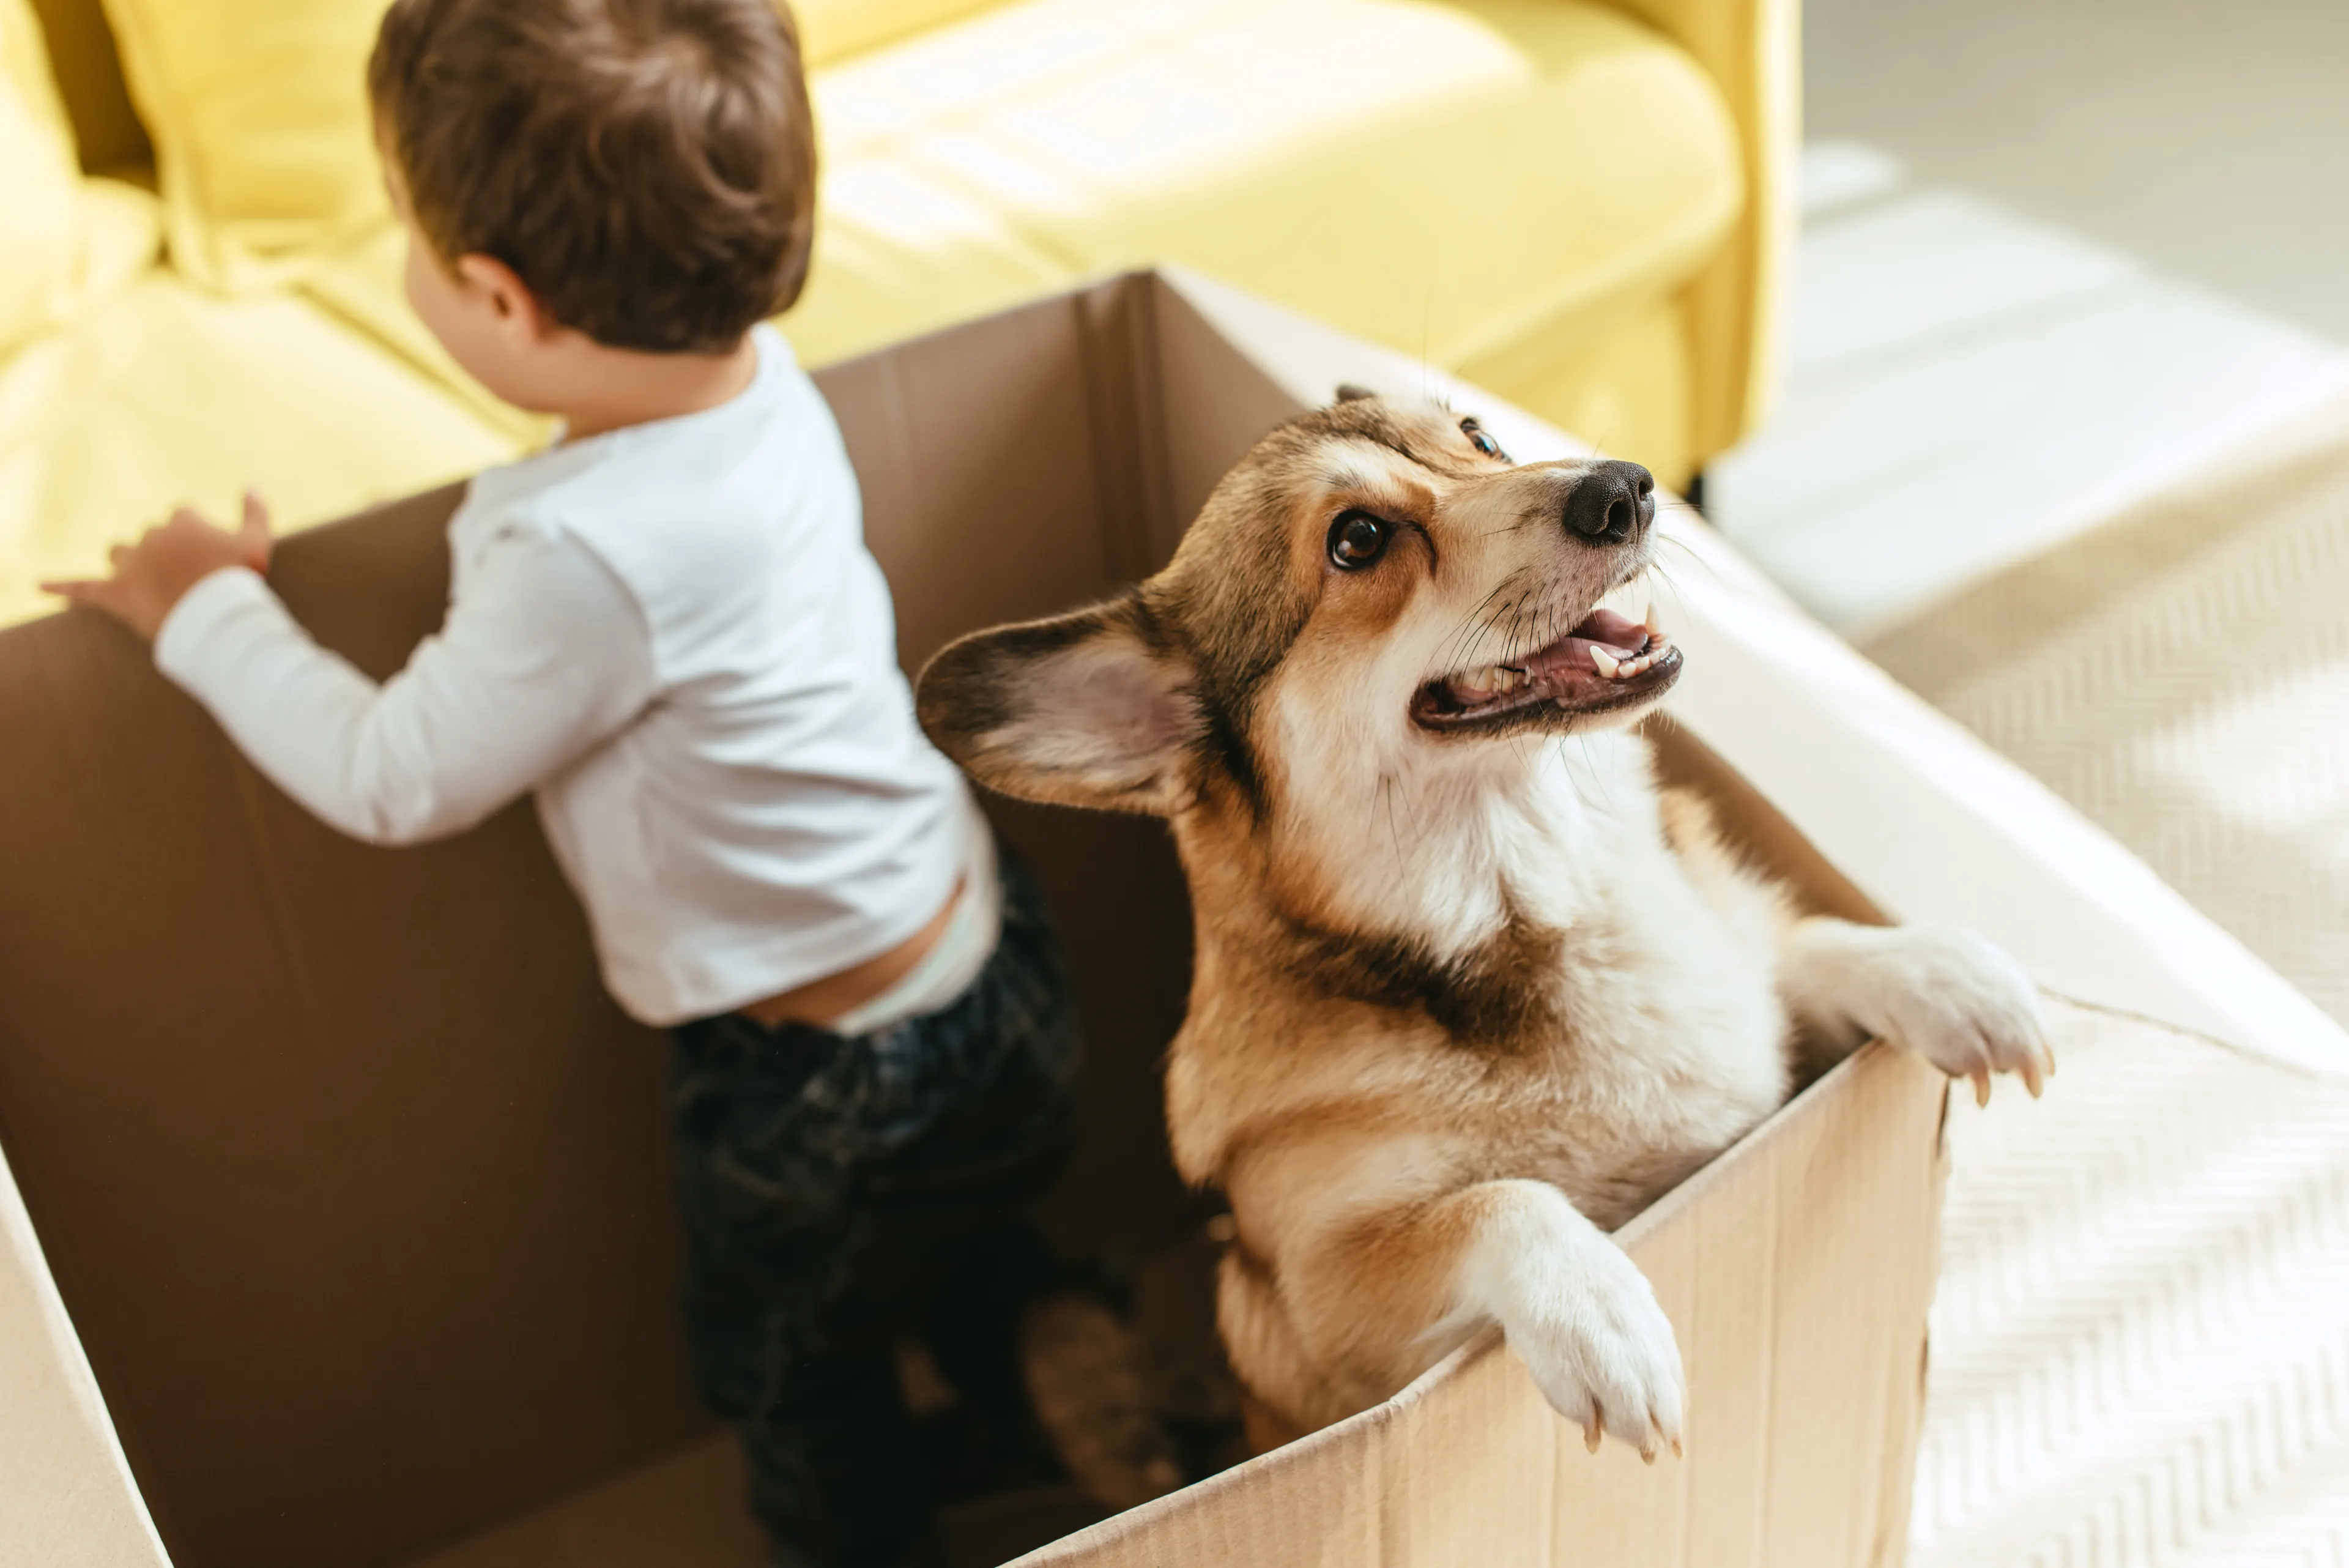 Boy playing with welsh corgi dog in cardboard box